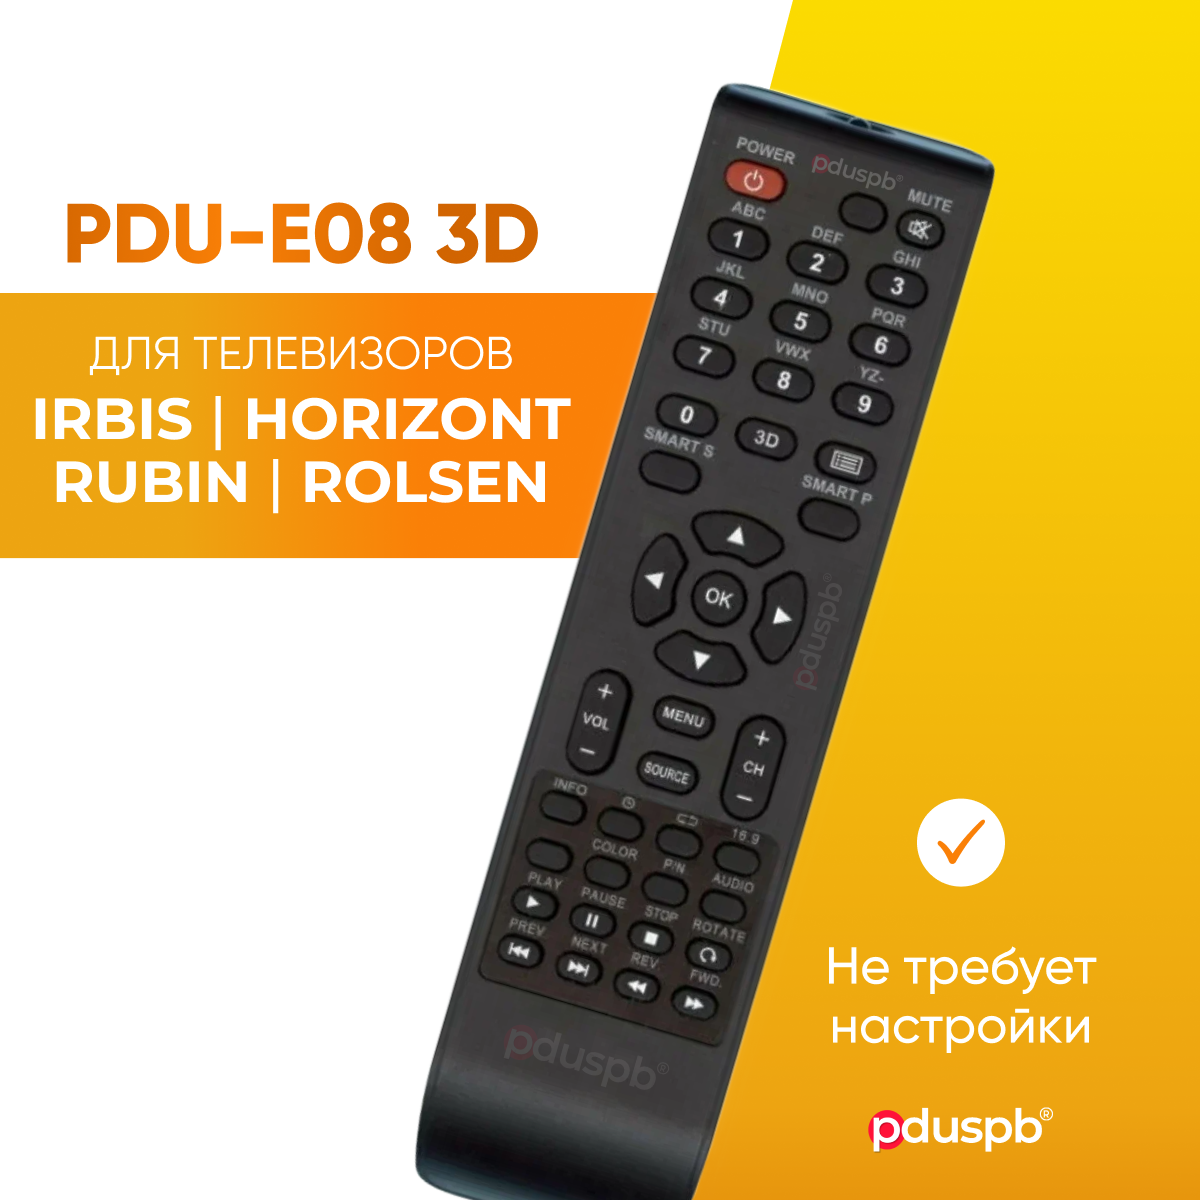 Пульт PDU-E08 3D для Rubin (Рубин) Rolsen Irbis HORIZONT (Горизонт) Erisson Mystery Fusion Daewoo Hyundai Telefunken Smart TV